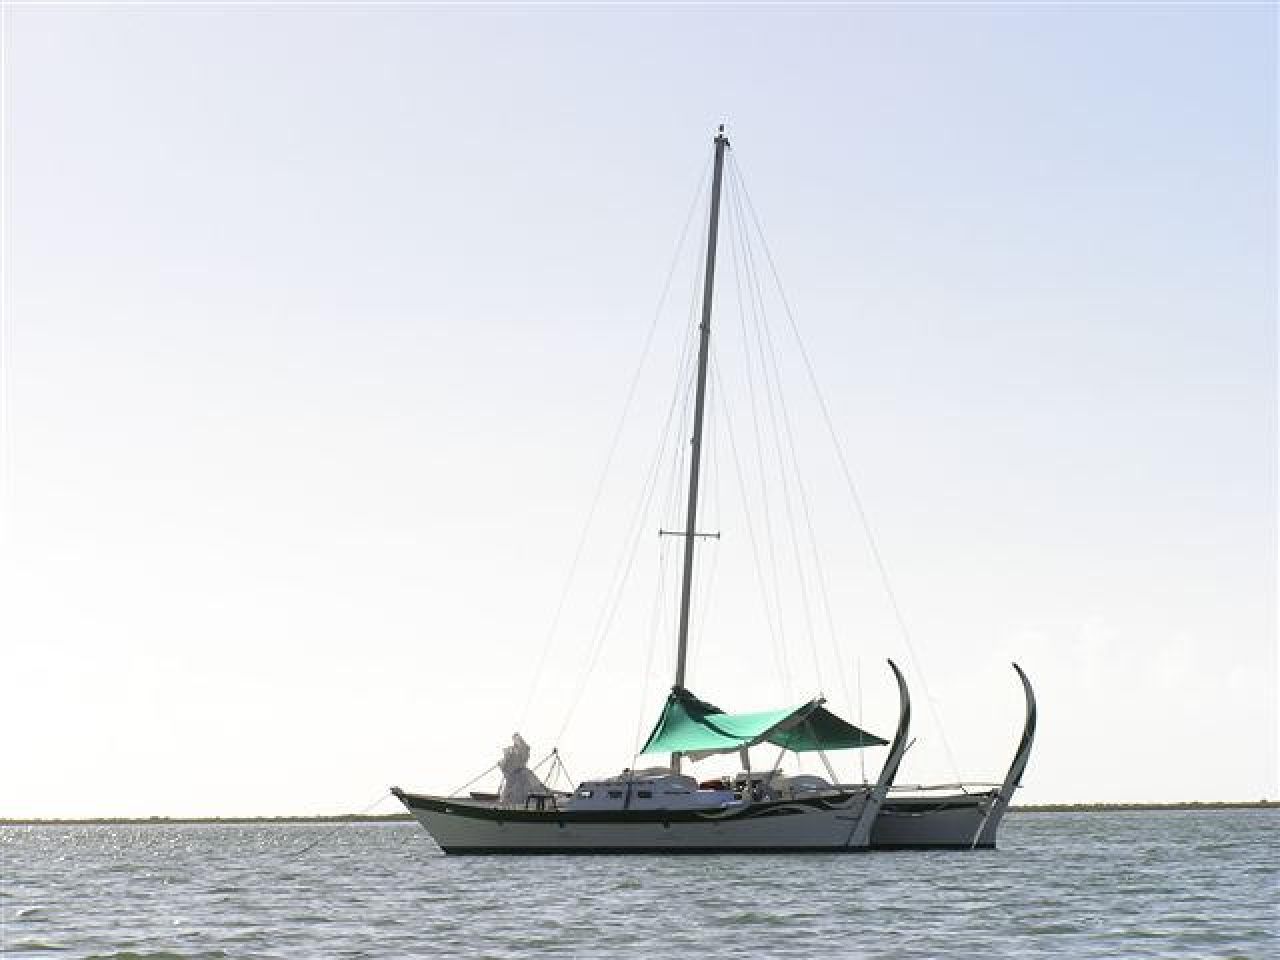 Double canoe catamaran on the water